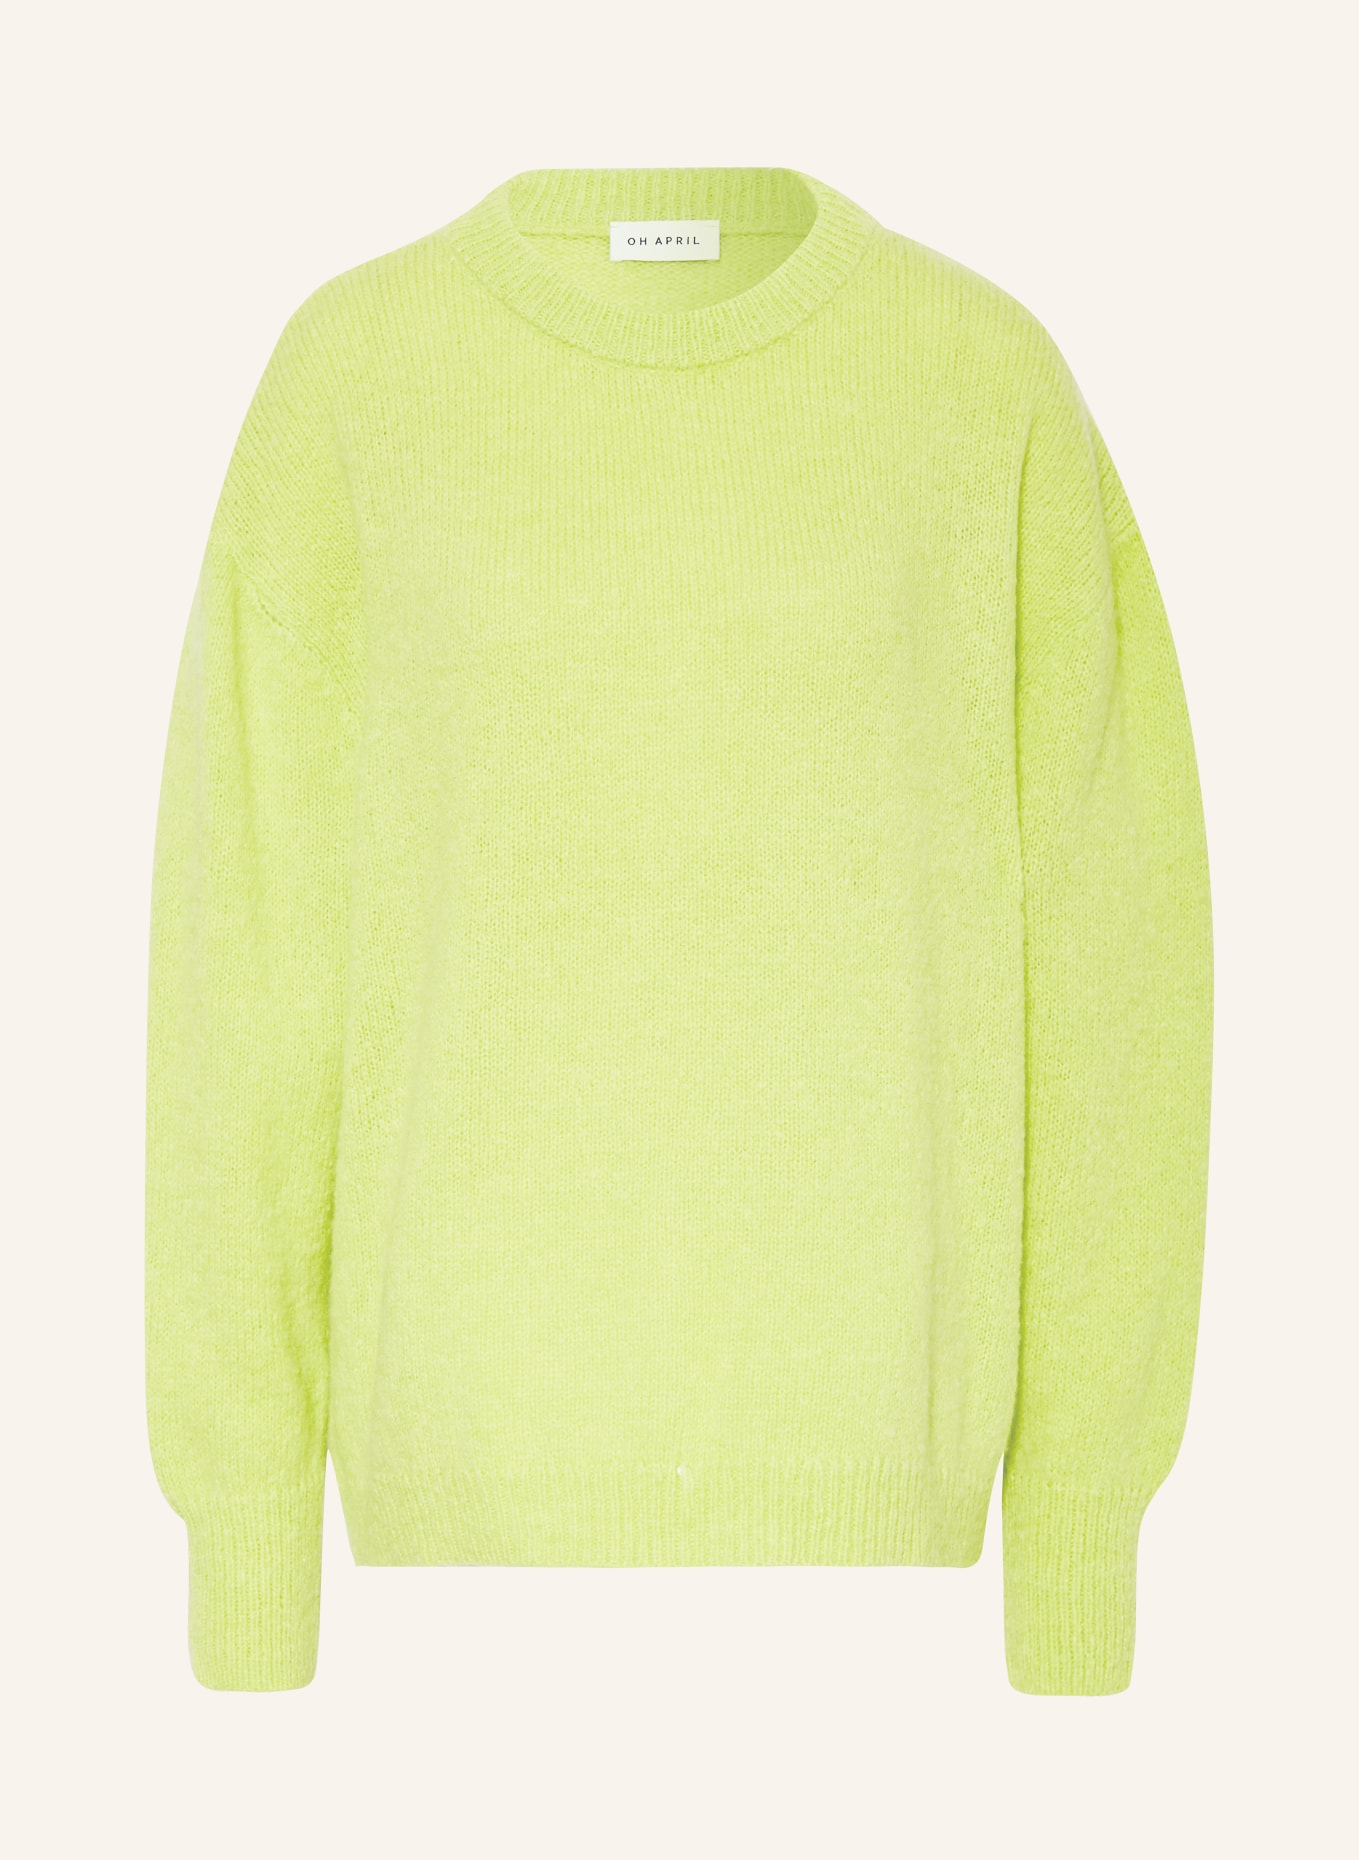 OH APRIL Oversized-Pullover OLA mit Alpaka, Farbe: LIME LIME (Bild 1)